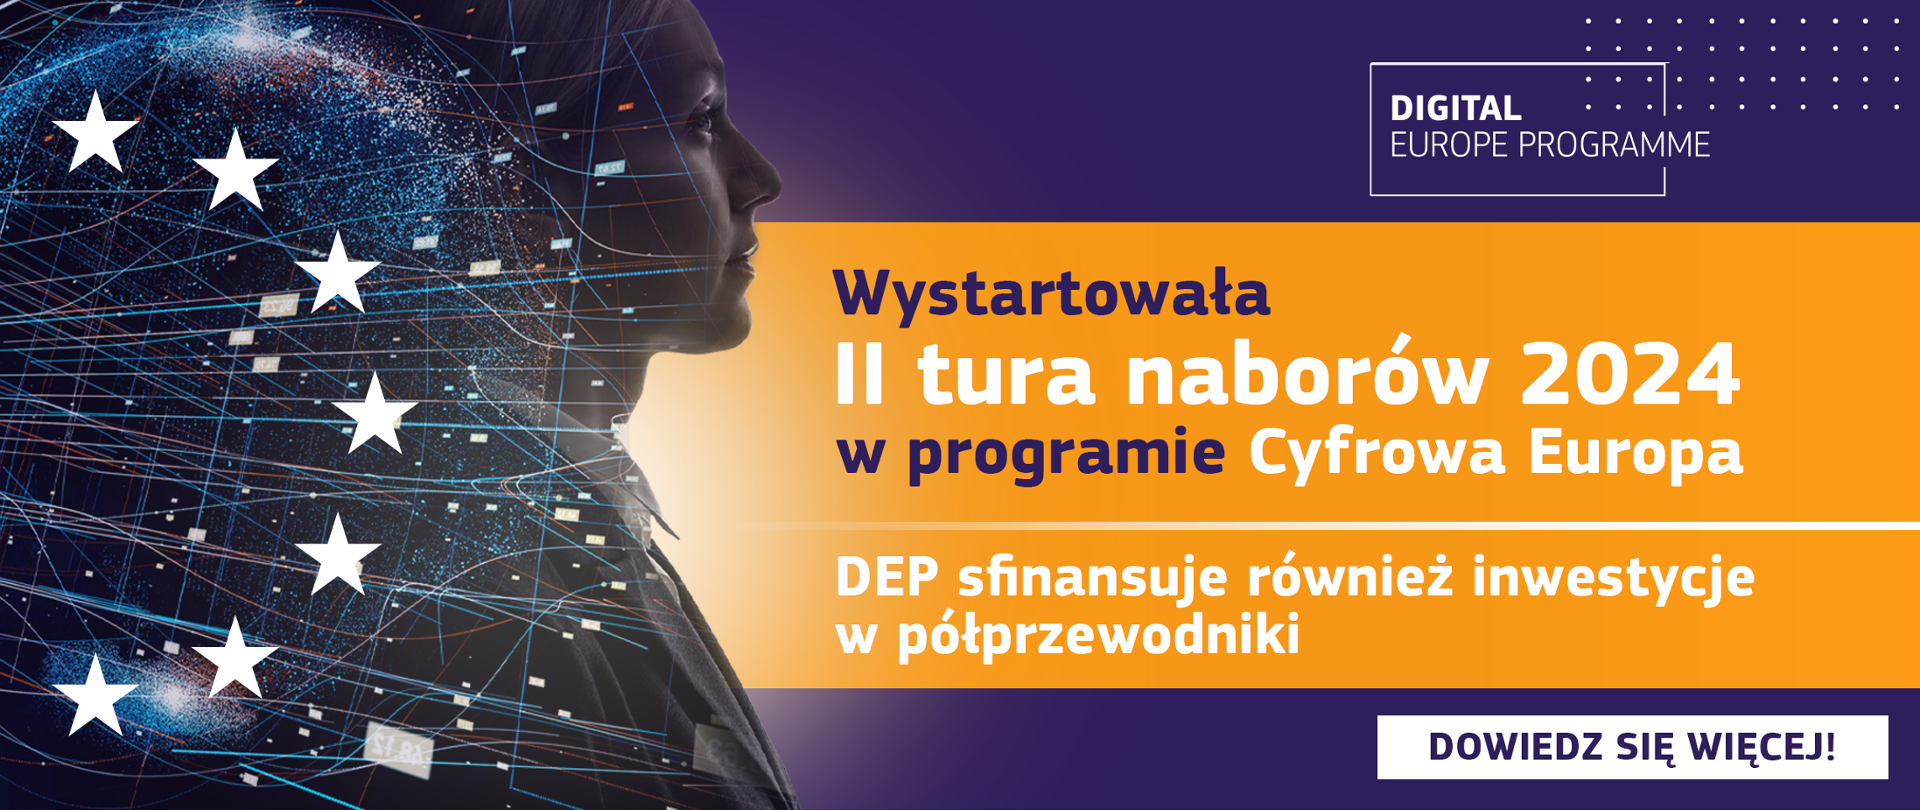 Digital_Europe_Programme